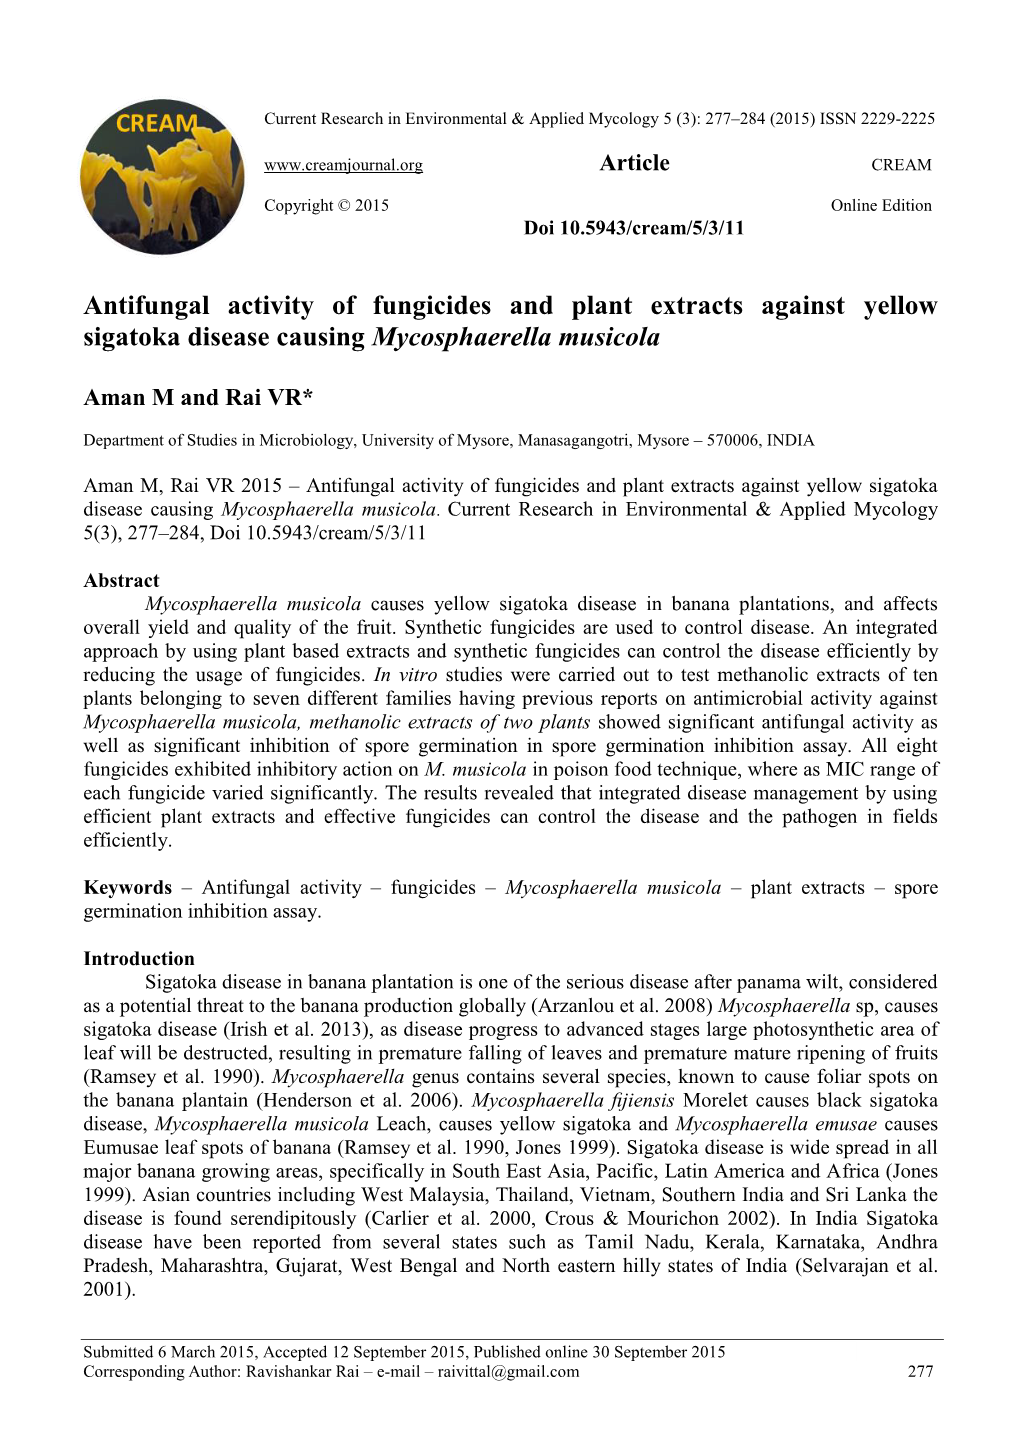 Antifungal Activity of Fungicides and Plant Extracts Against Yellow Sigatoka Disease Causing Mycosphaerella Musicola